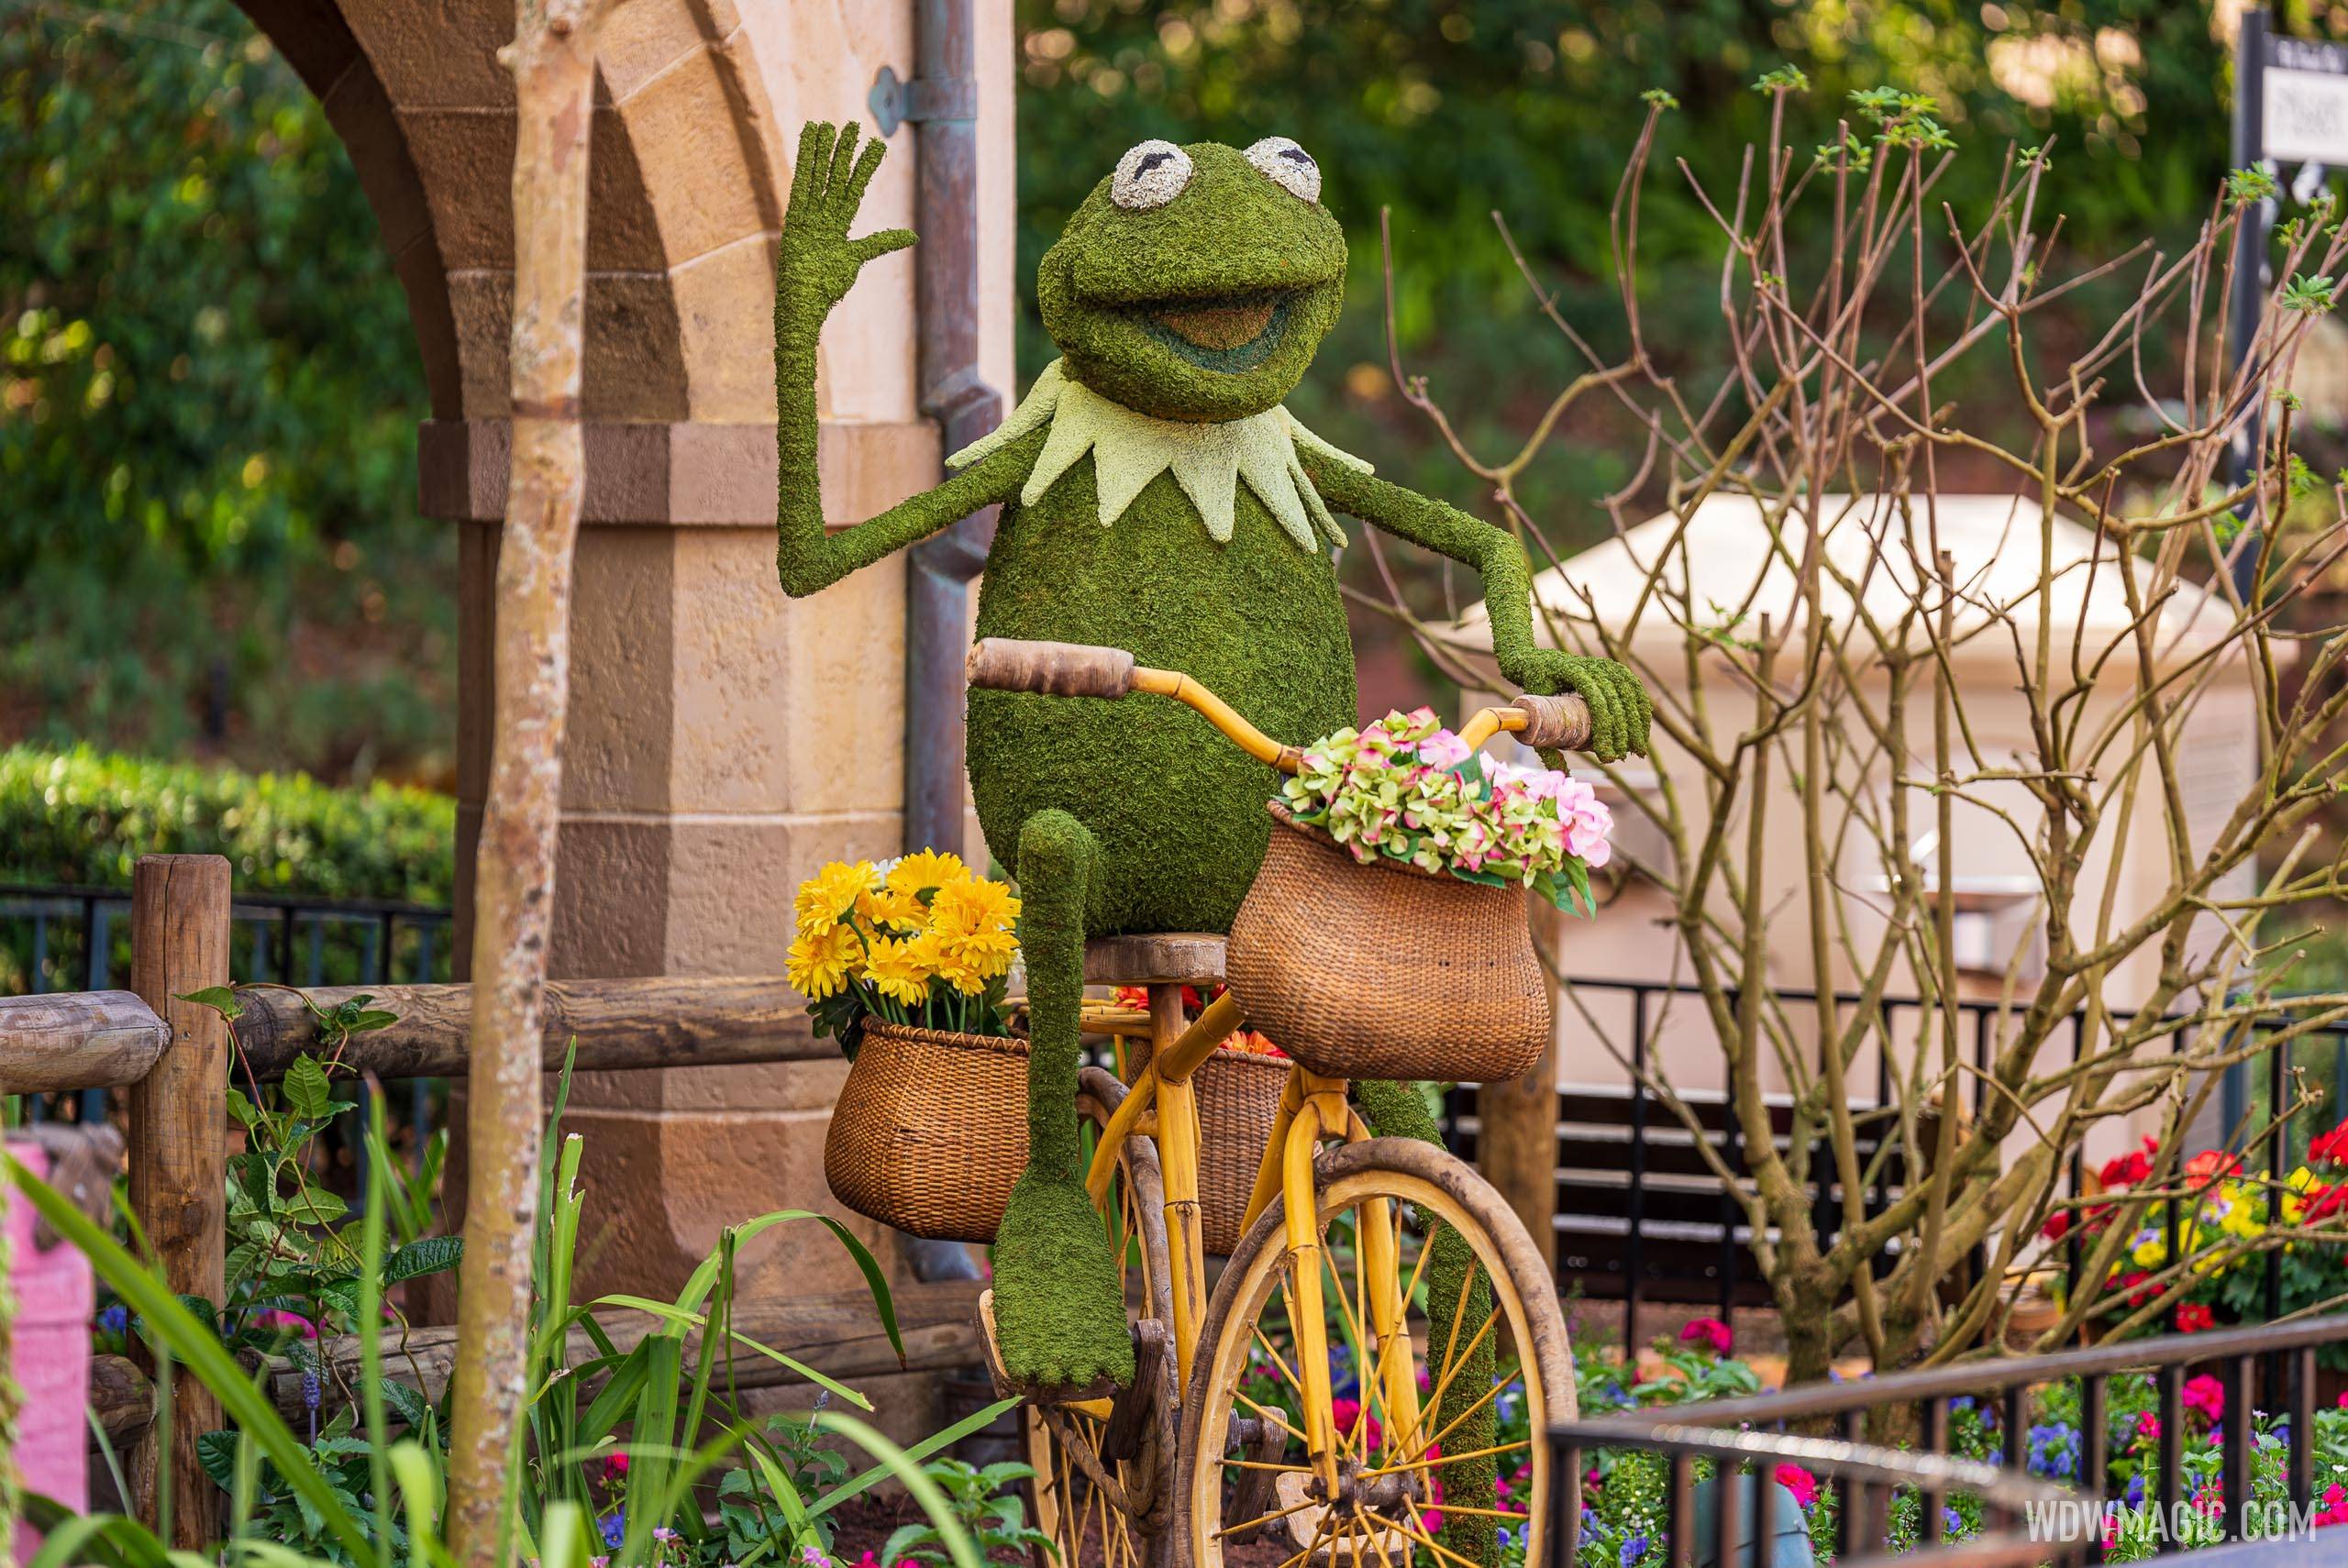 Kermit the Frog – Germany Pavilion